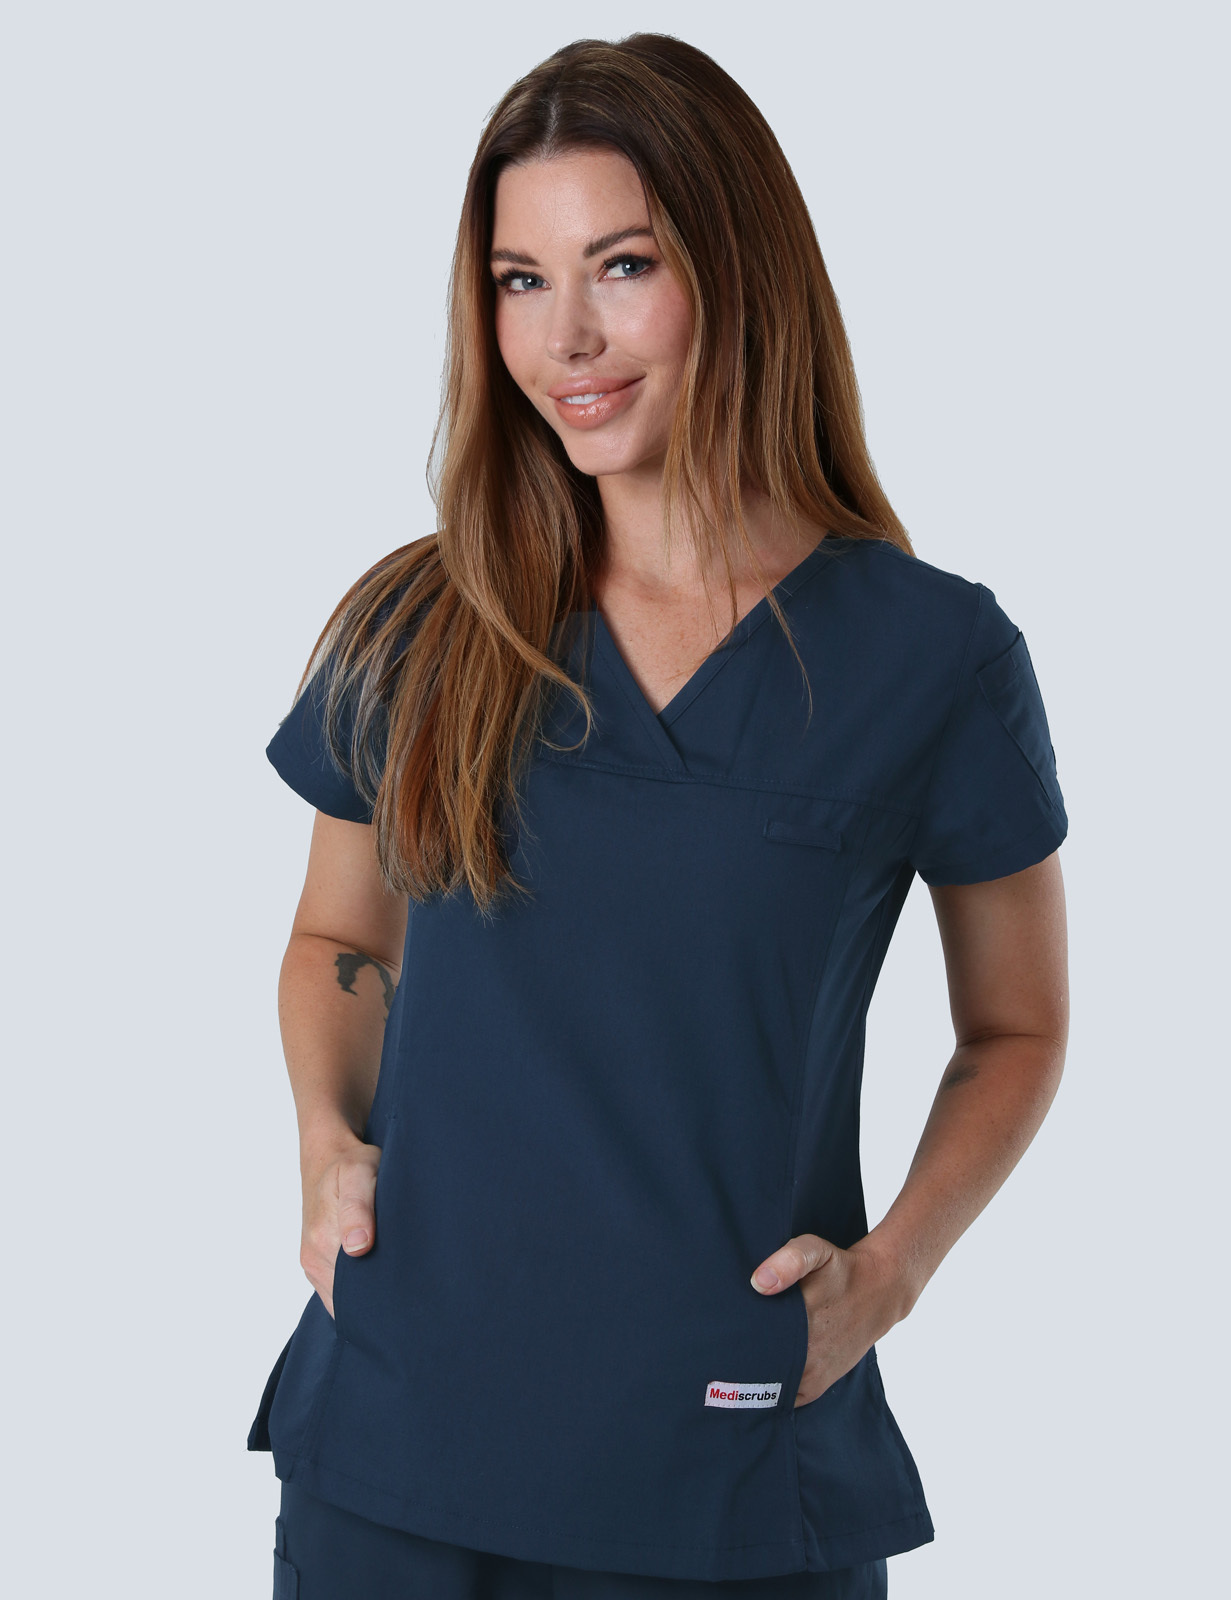 Ipswich Hospital Nurse - Ward 7C Uniform Set Bundle (Women's Fit Solid Top and Cargo Pants in Navy incl Logos)